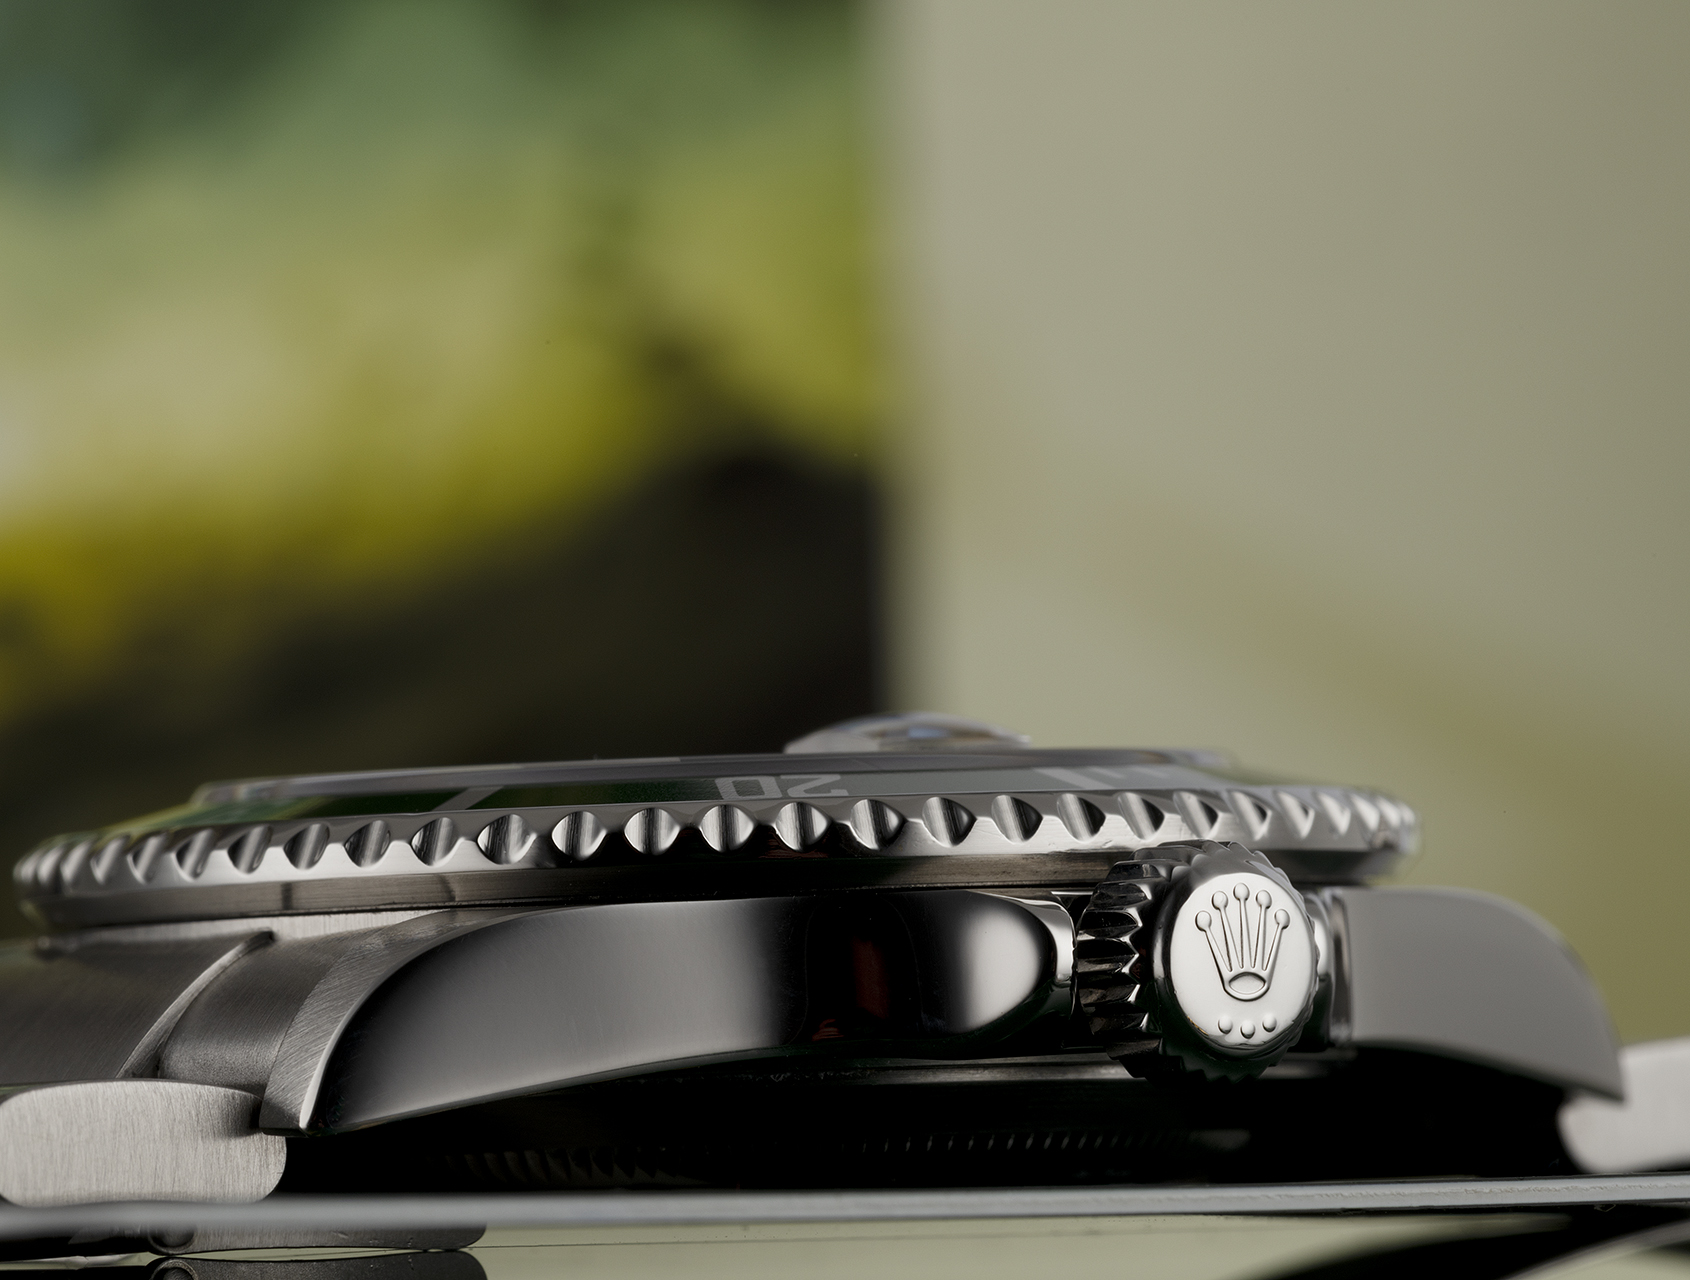 Rolex Submariner Date Watches, ref 16610LV, V-Series 'RRR' Final Year